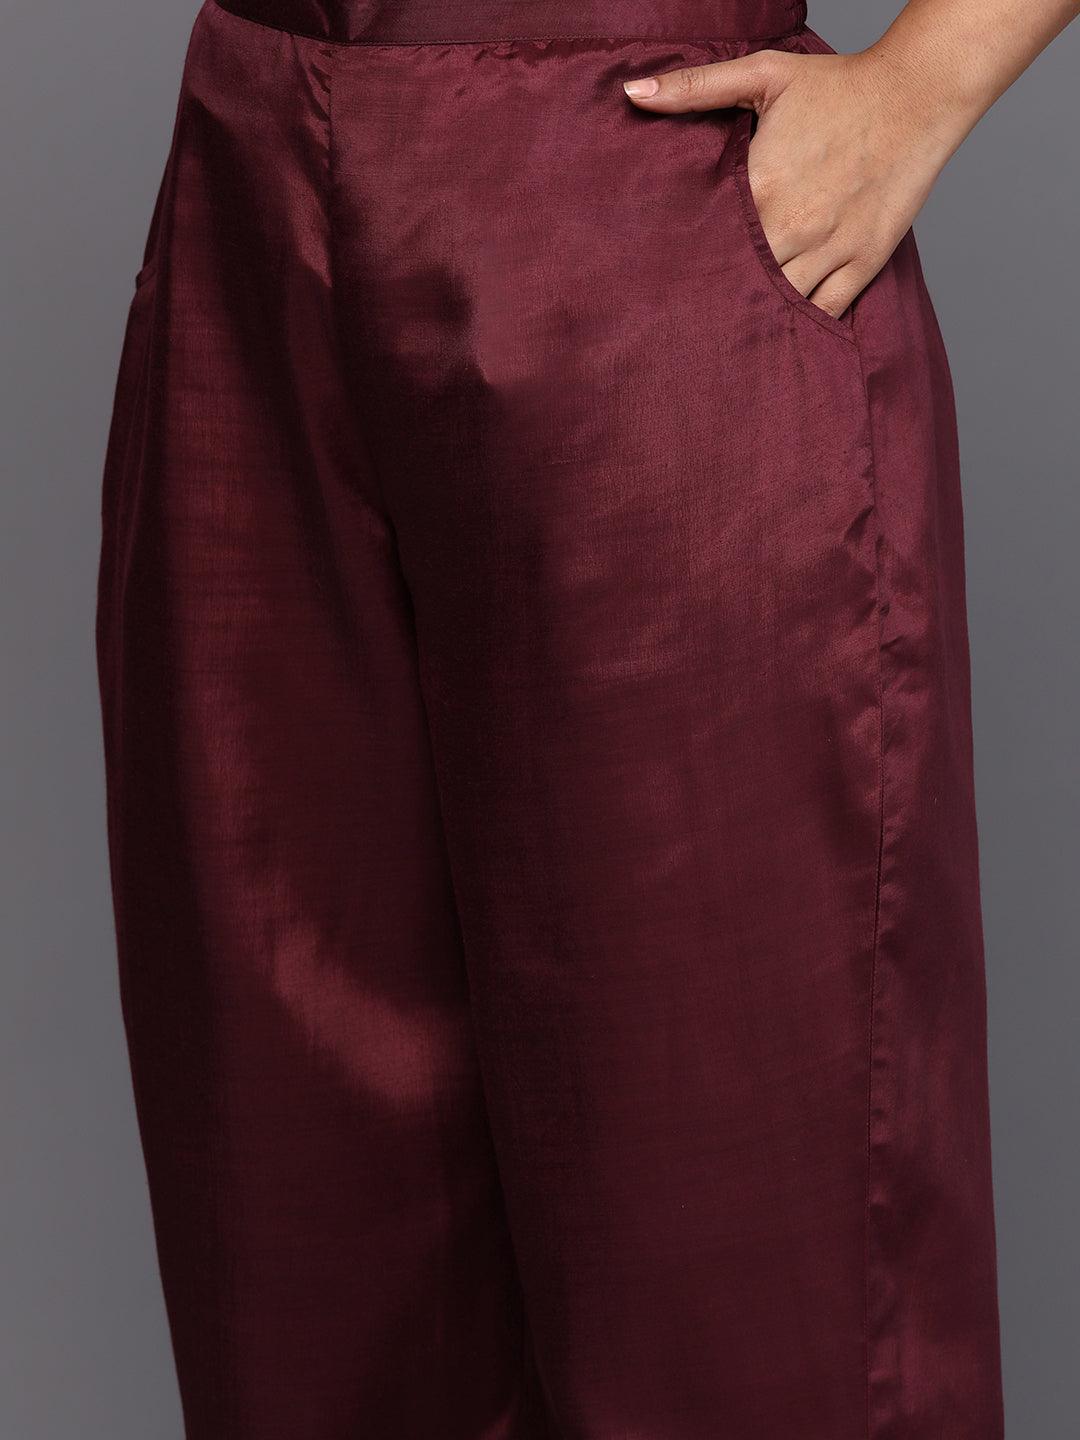 Plus Size Wine Woven Design Chanderi Silk Straight Suit With Dupatta